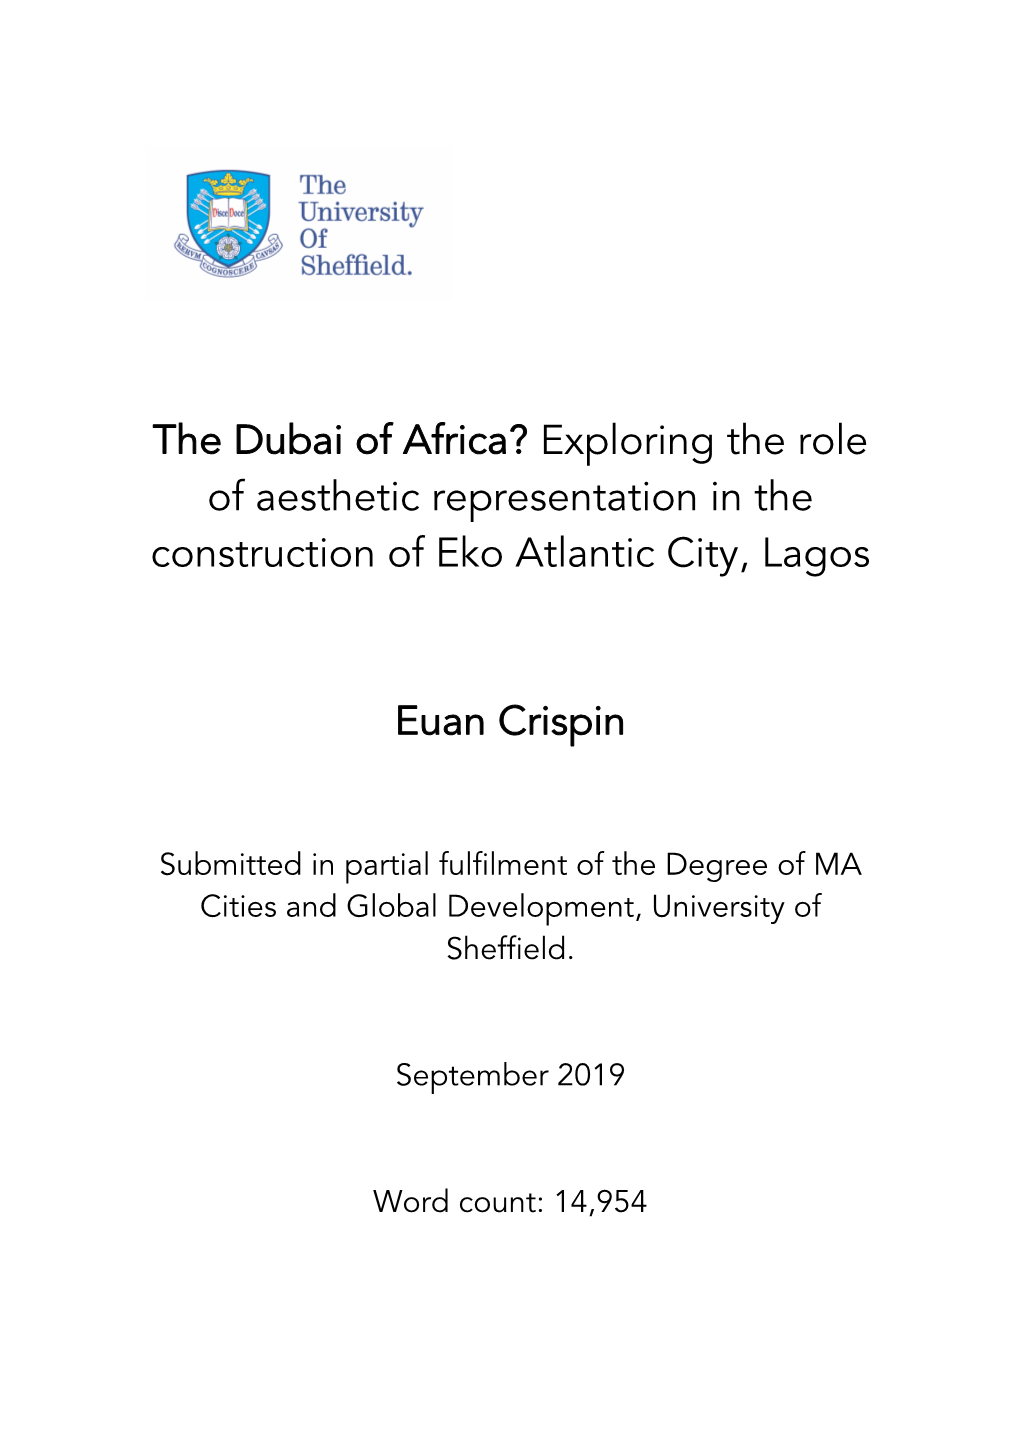 Of Aesthetic Representation in the Construction of Eko Atlantic City, Lagos